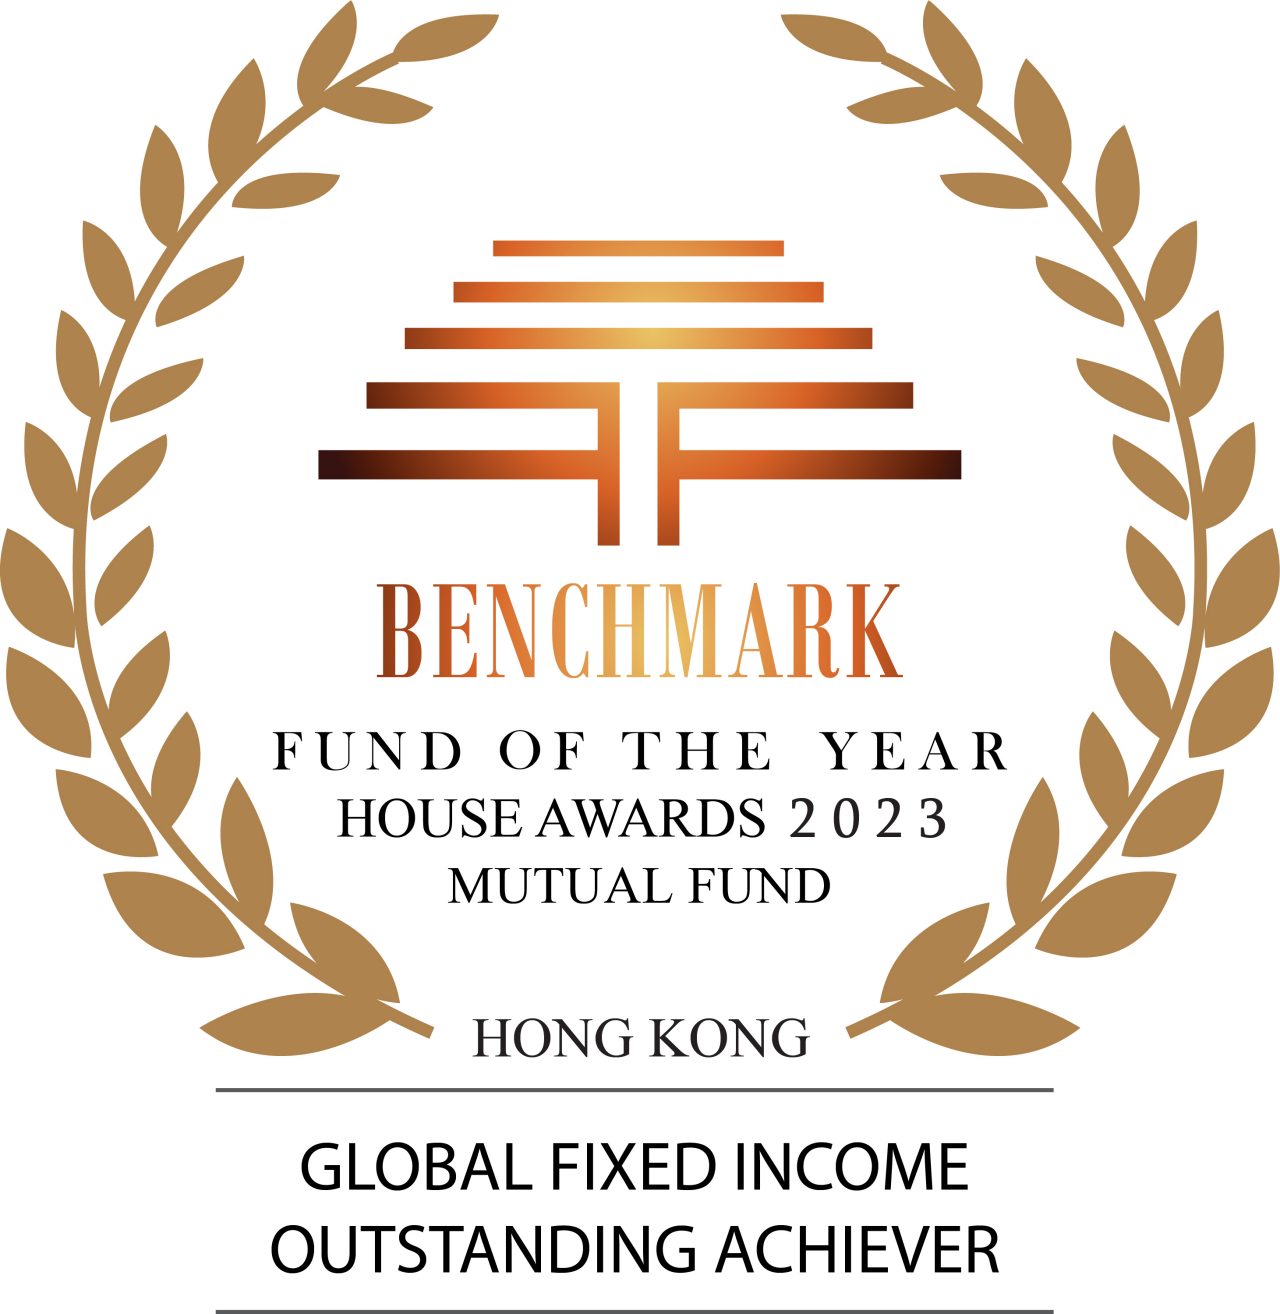 FOYA2021-MUTUAL FUND-HK-HOUSE AWARDS-GLOBAL FIXED INCOME-BIC